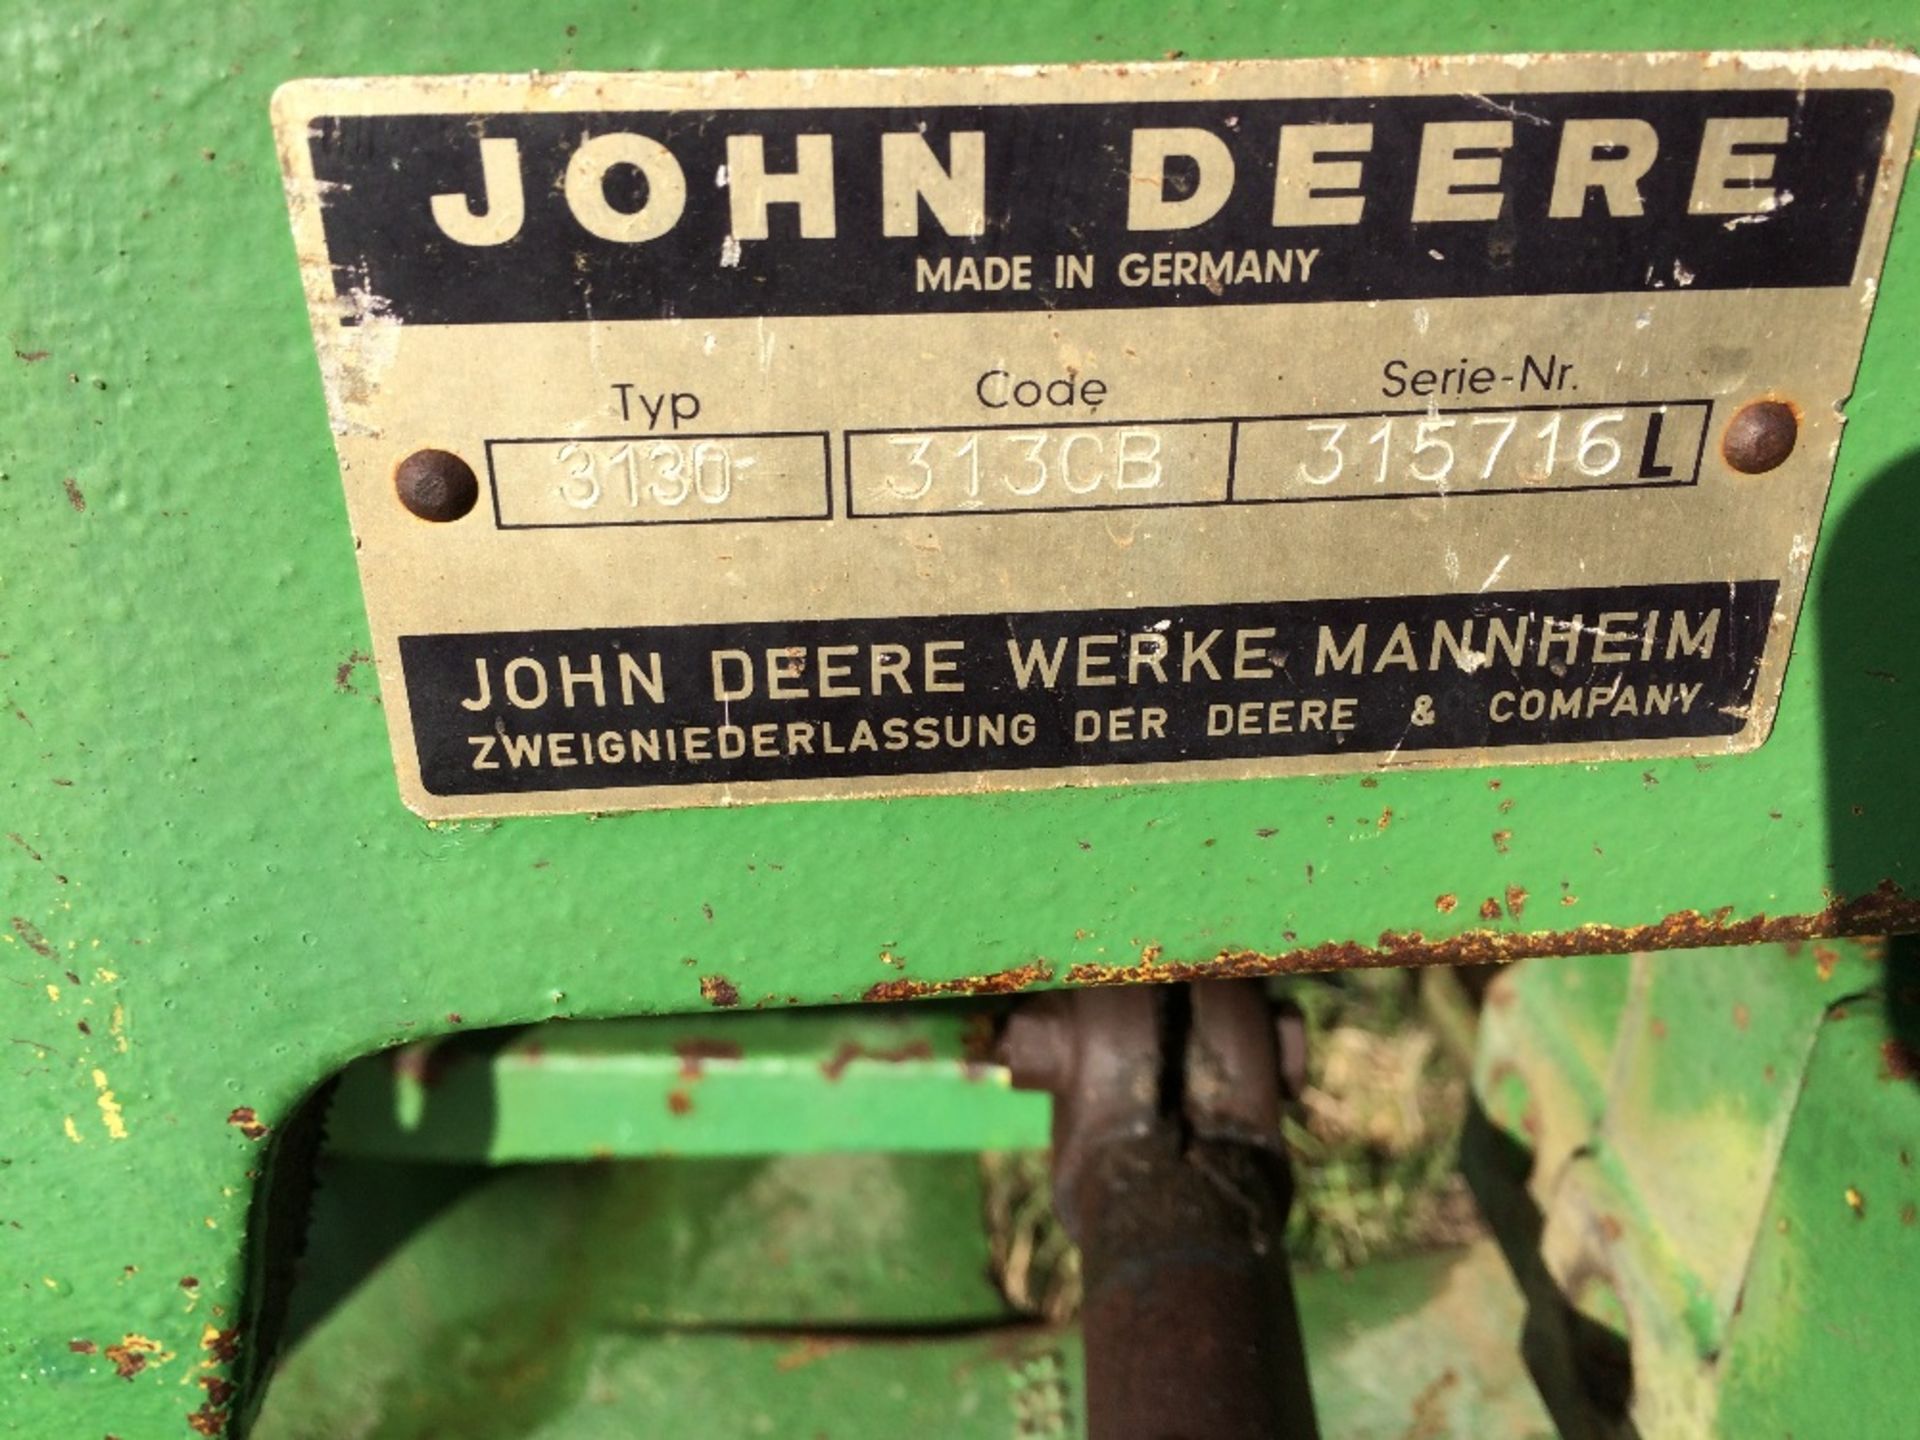 John Deere 3130, 1979
Registration: PHO 130T
Serial No: 315716L, Code 313CB
9388 hours. Comes - Image 7 of 9